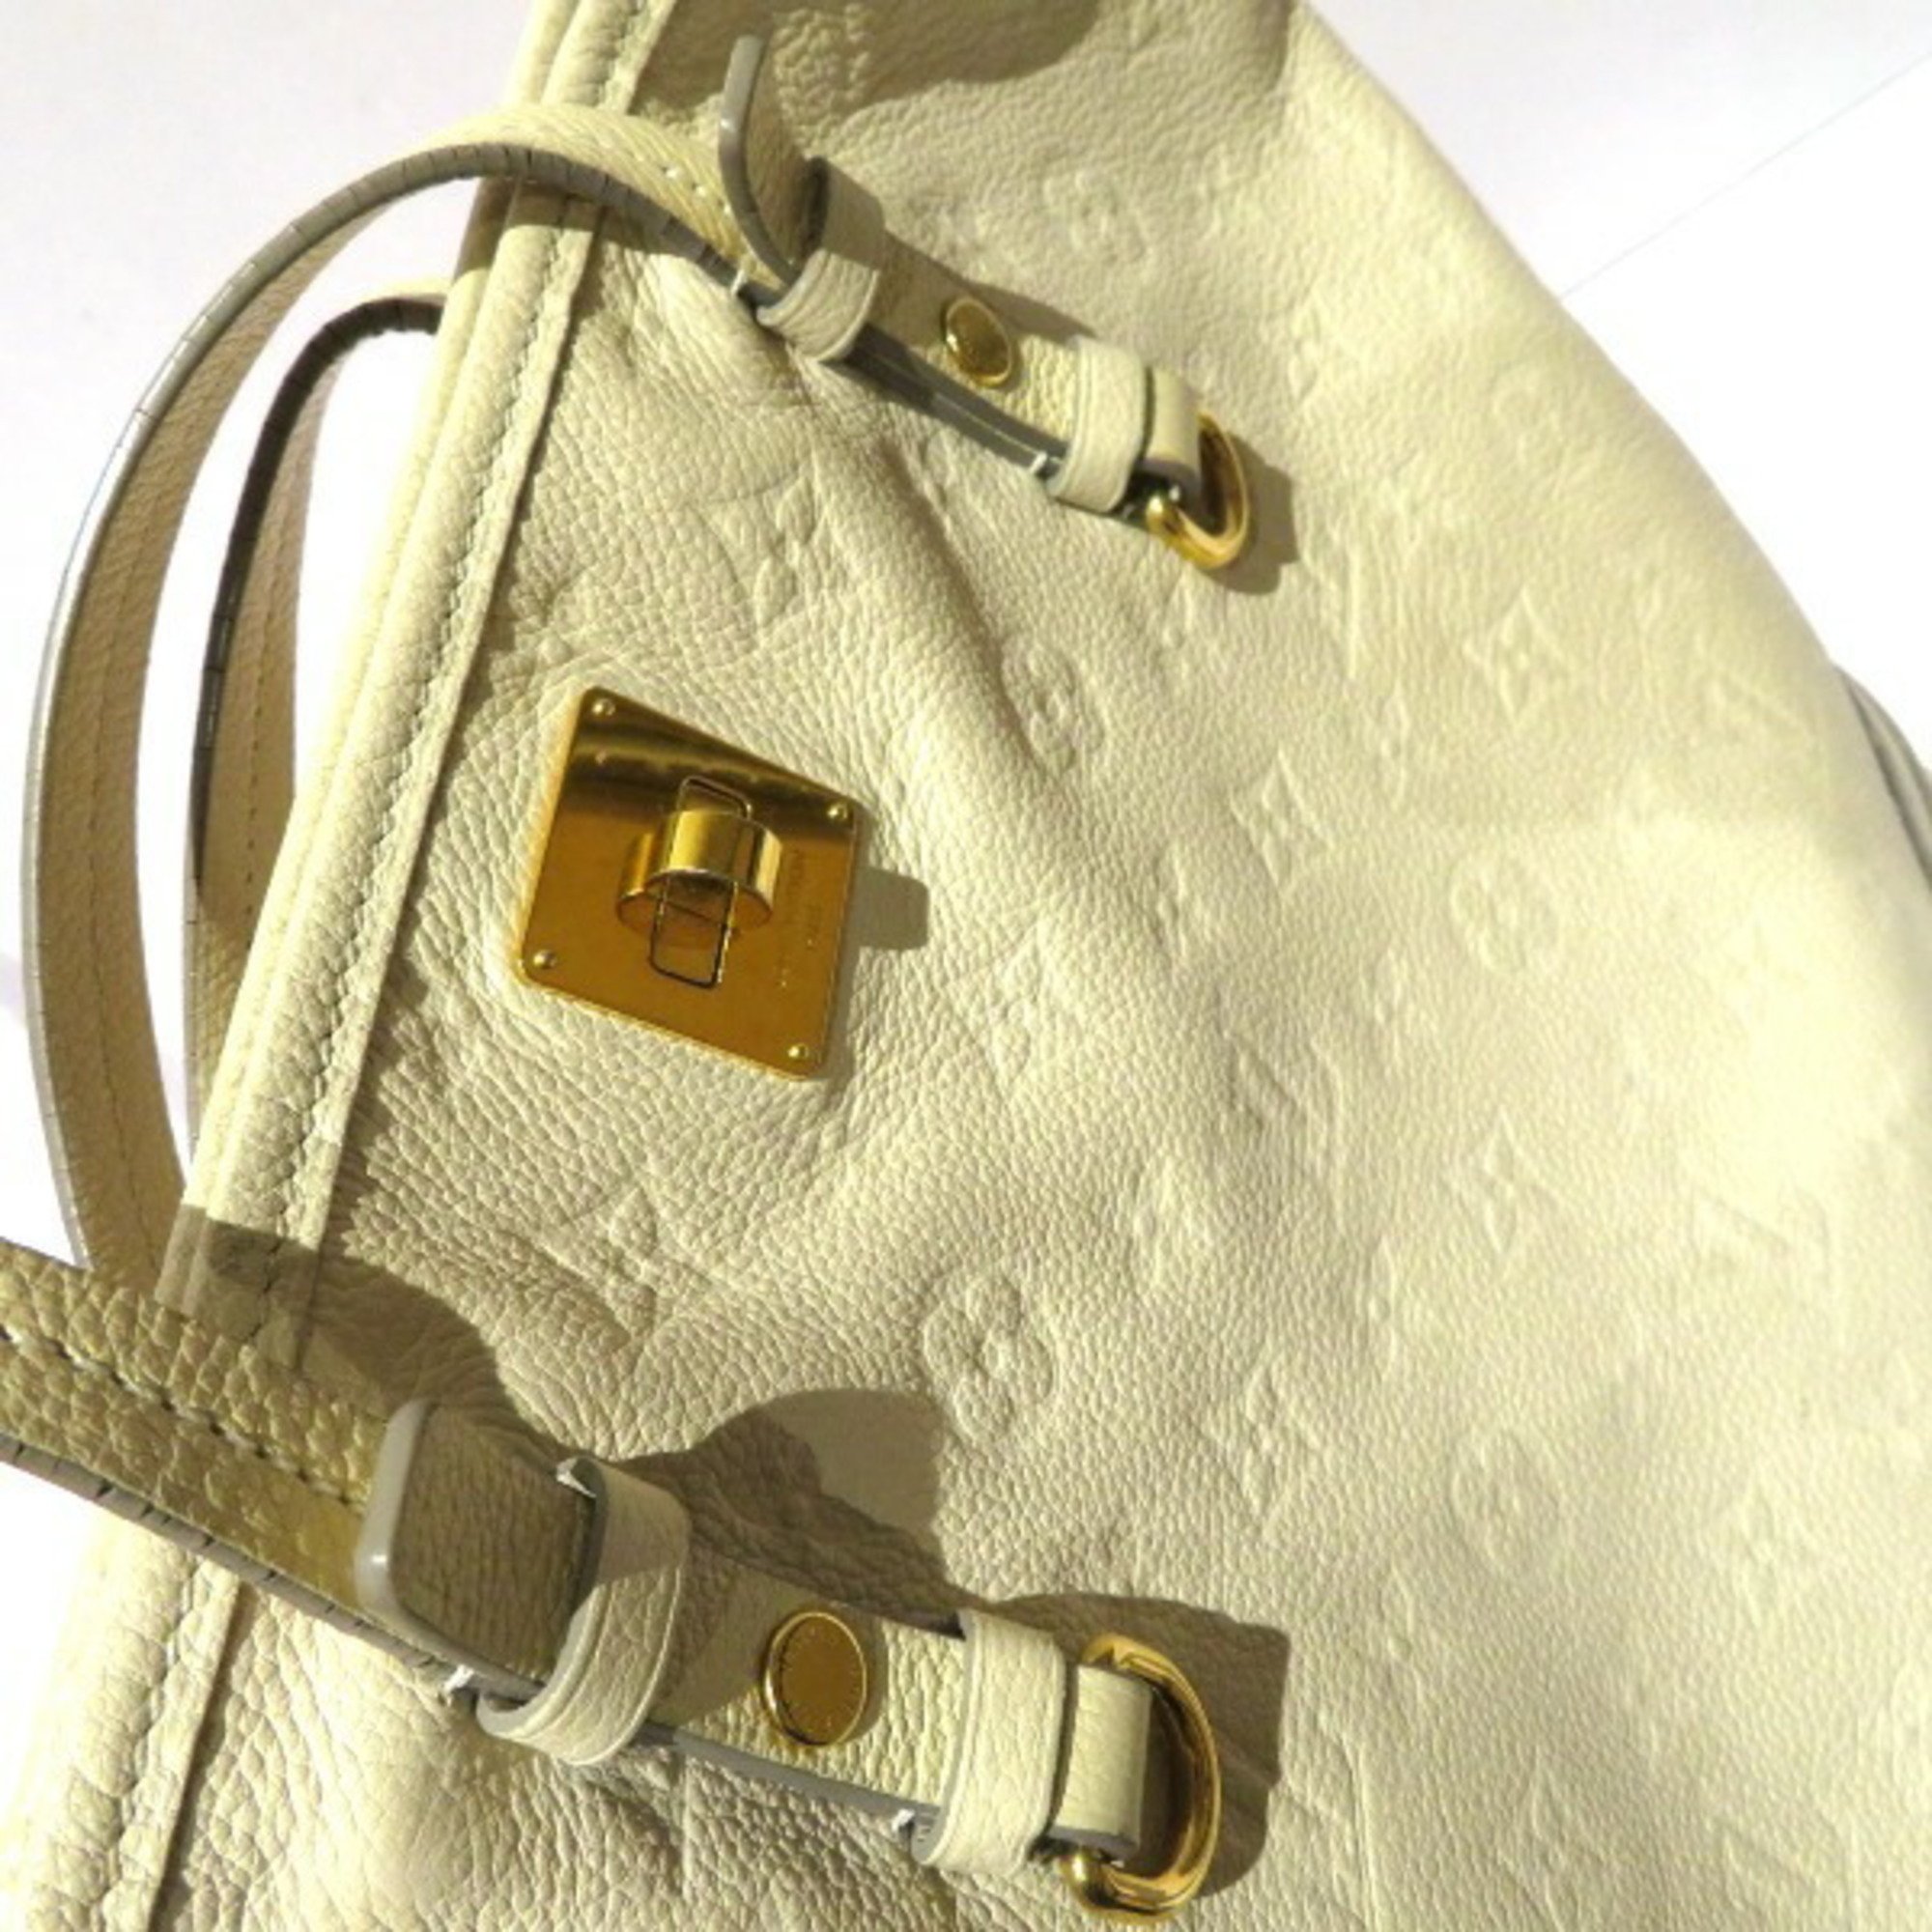 Louis Vuitton Monogram Empreinte Citadines PM M40554 Bag Tote Women's